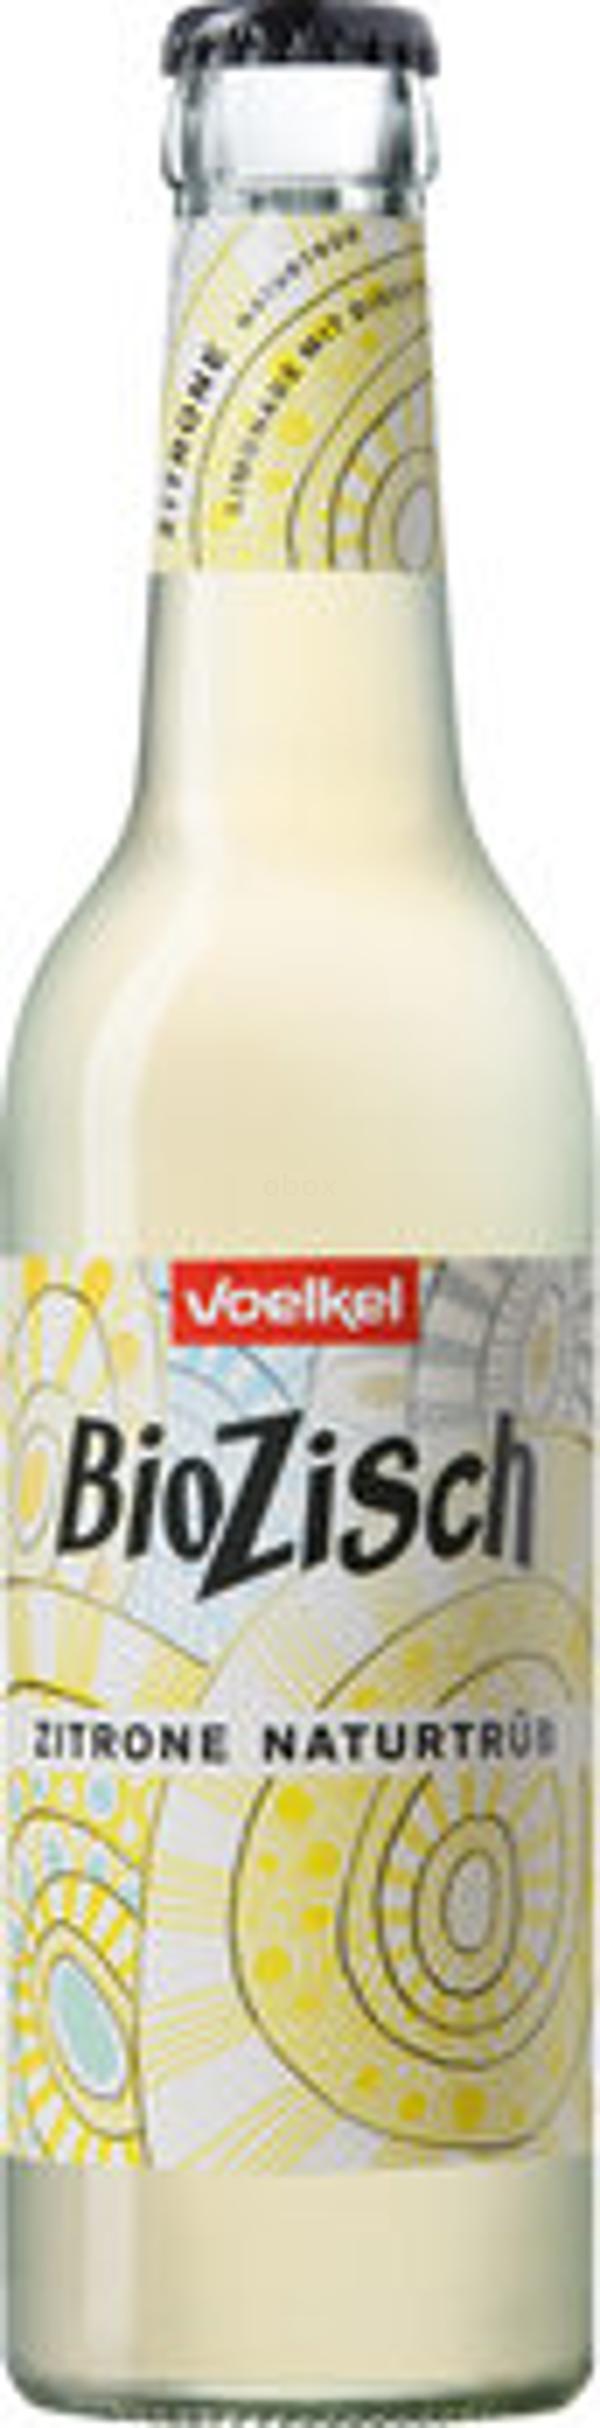 Produktfoto zu BioZisch Zitrone naturtrüb, 0,33l